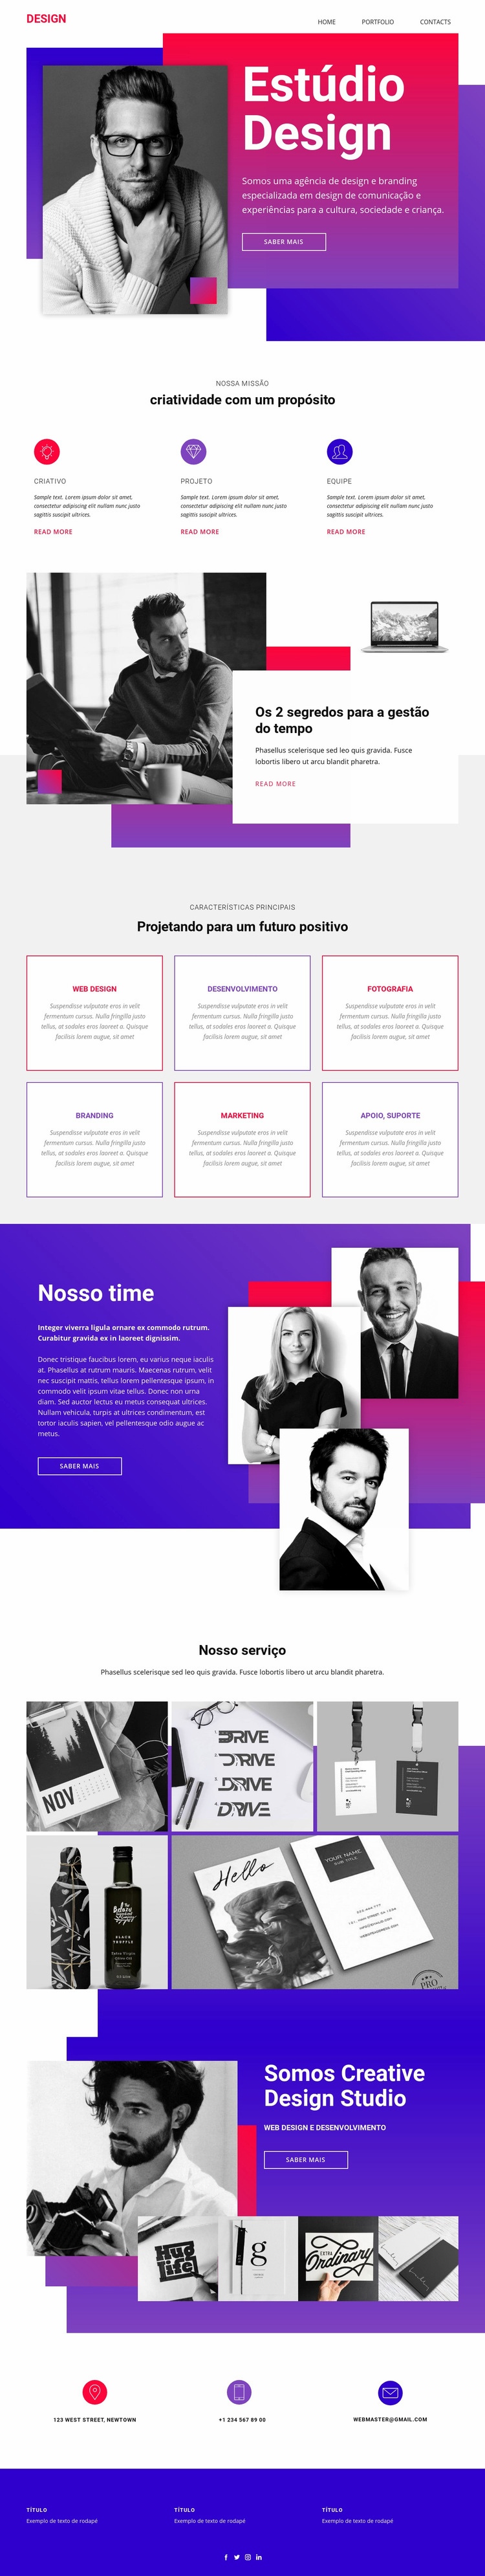 Time web design art Landing Page